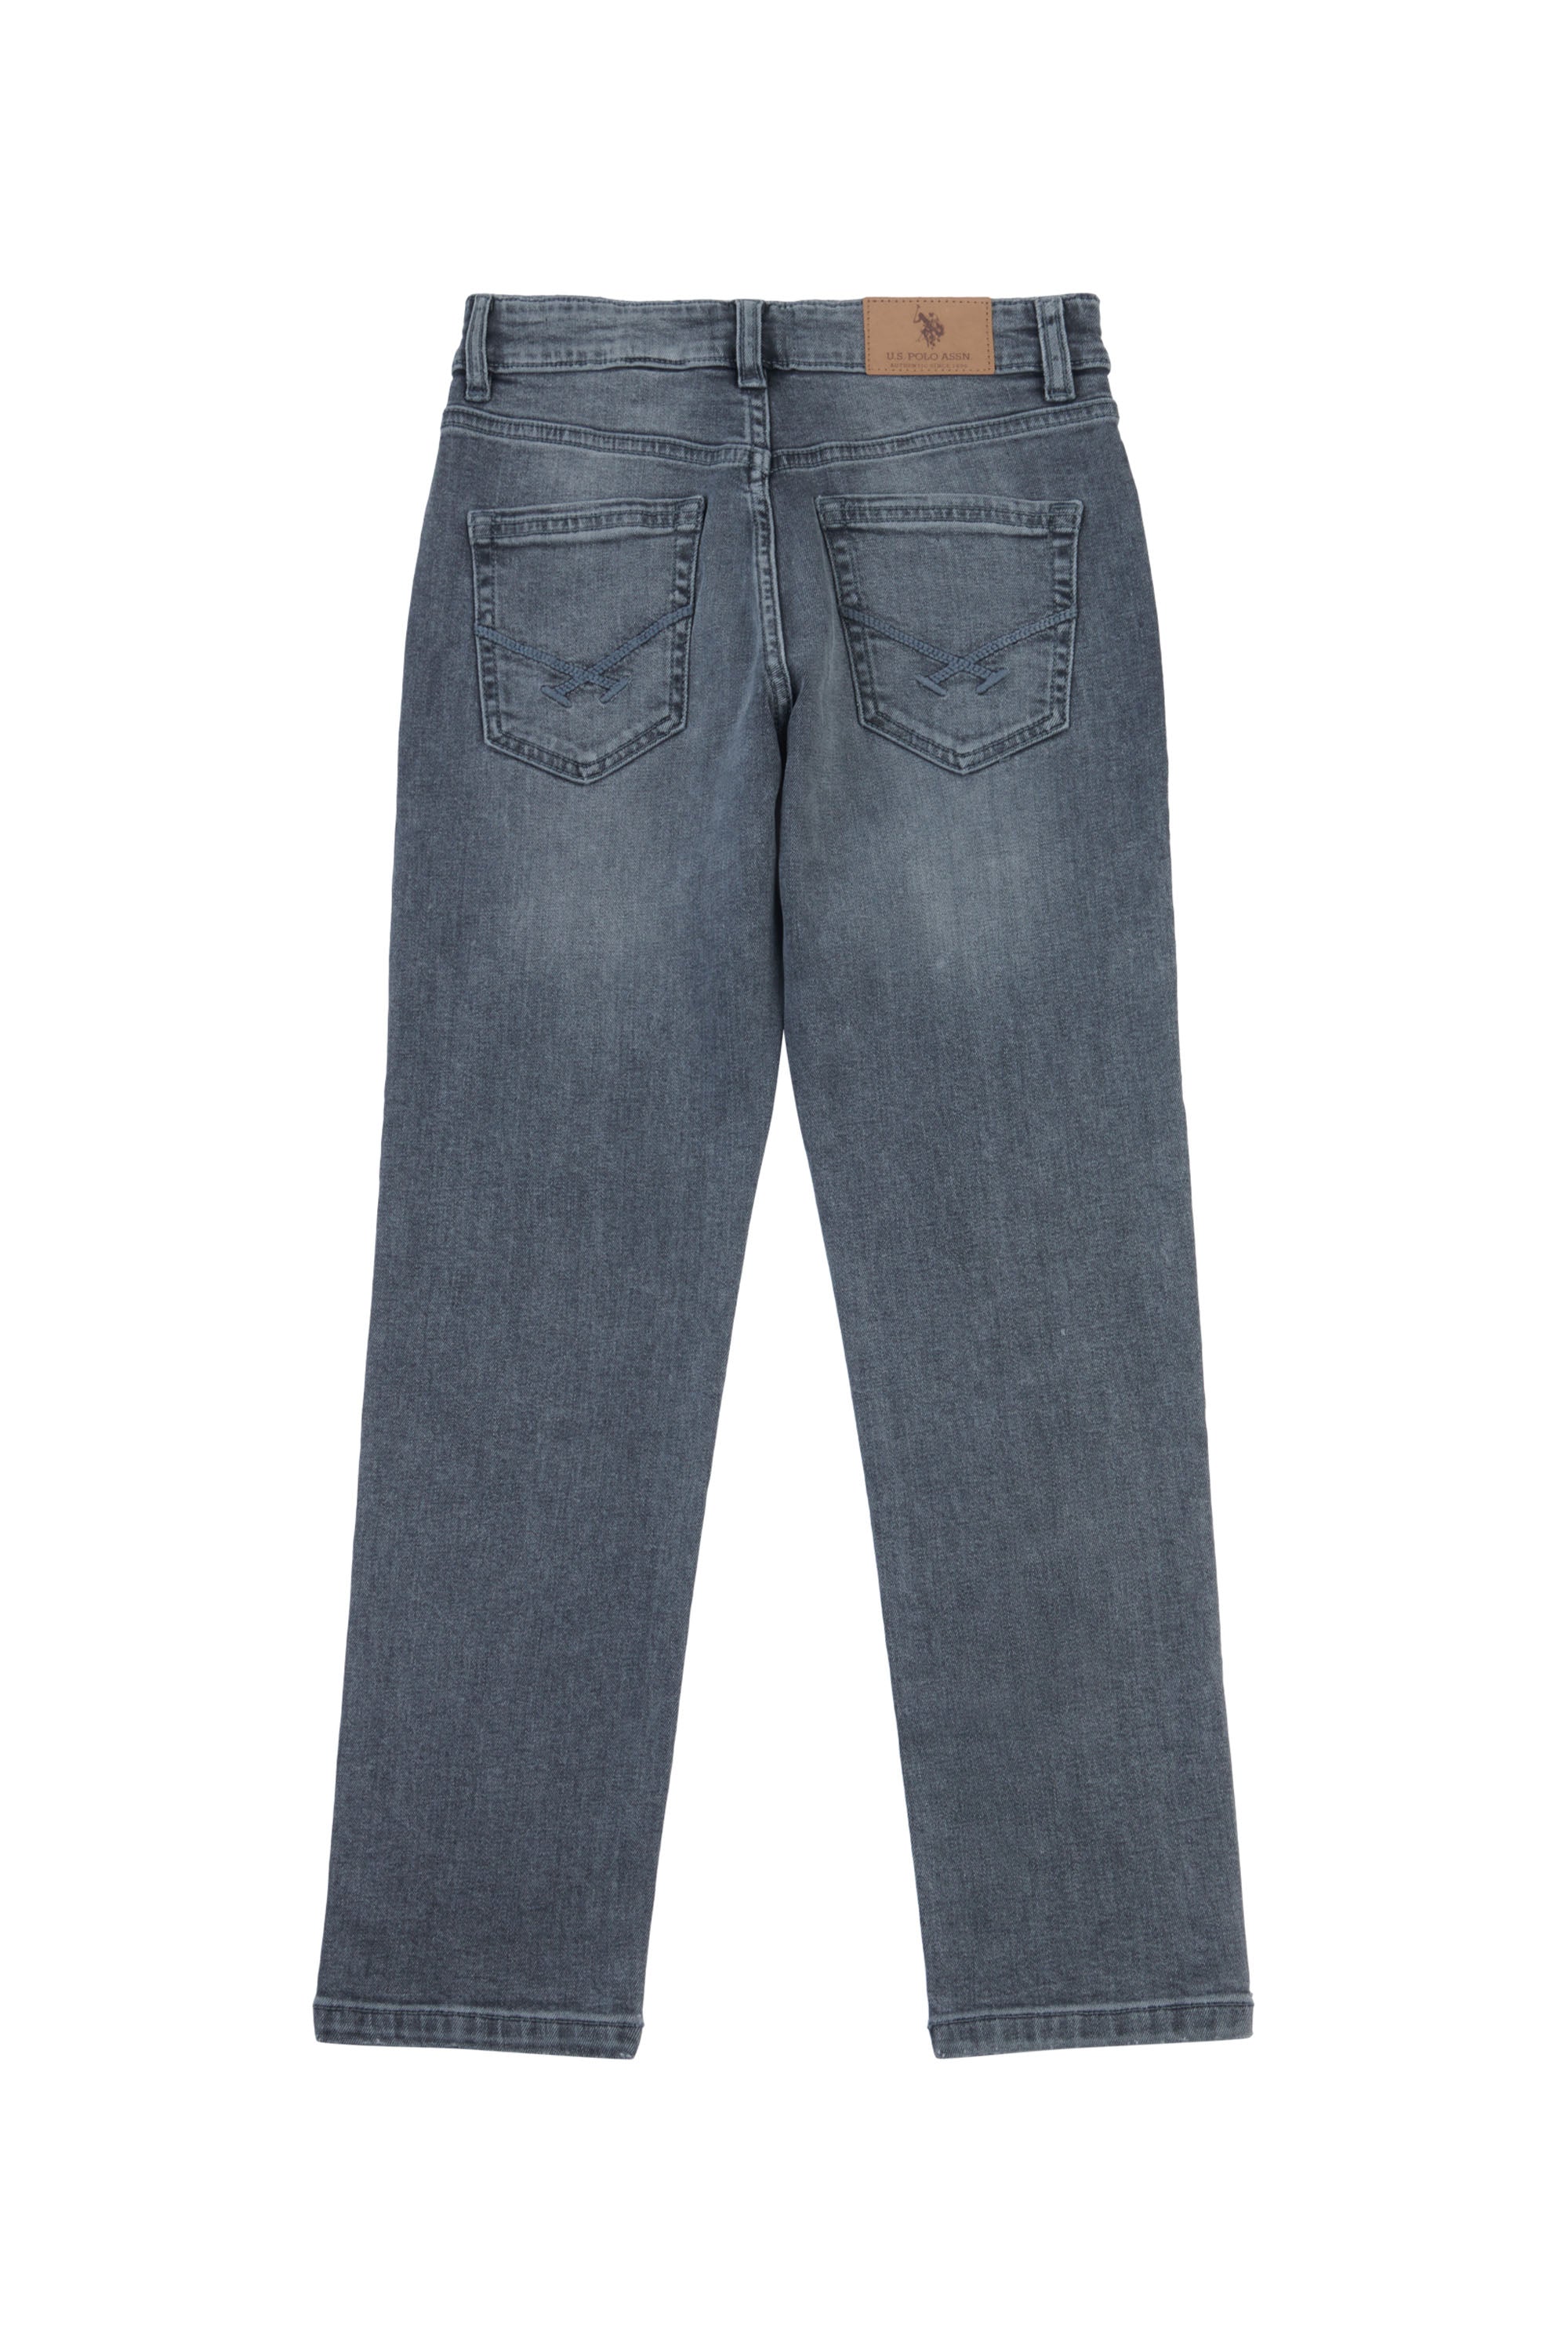 Boys 5 Pocket Slim Fit Denim Jeans in Grey Wash